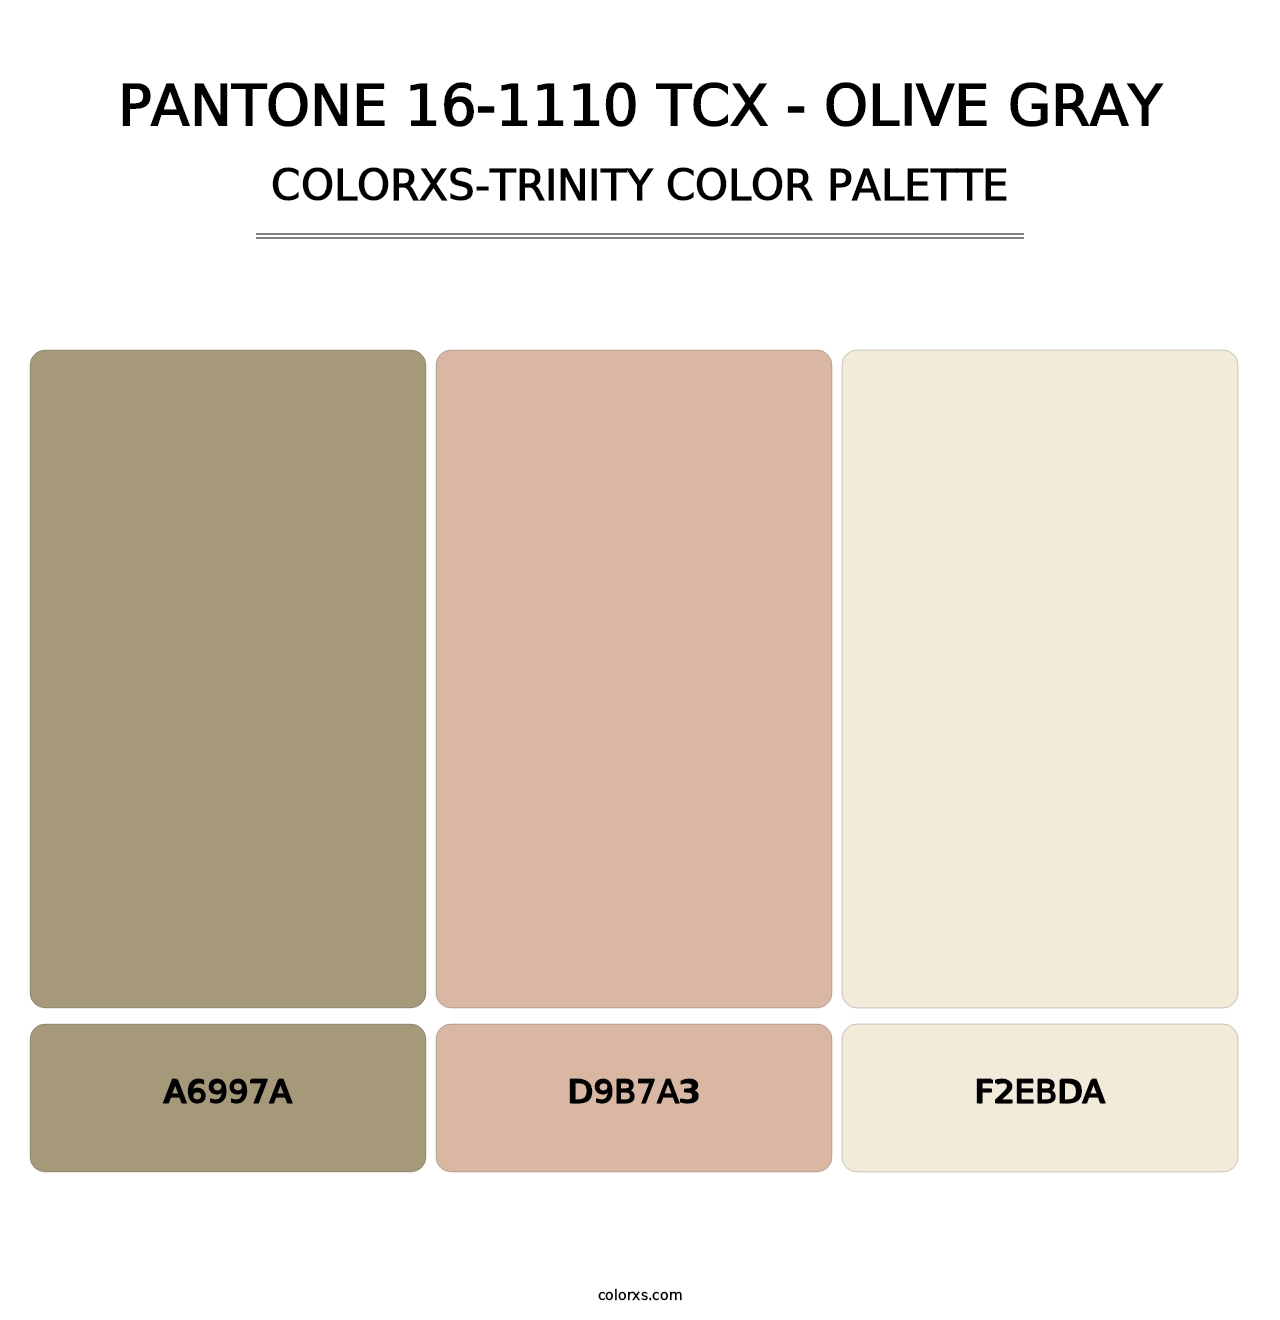 PANTONE 16-1110 TCX - Olive Gray - Colorxs Trinity Palette